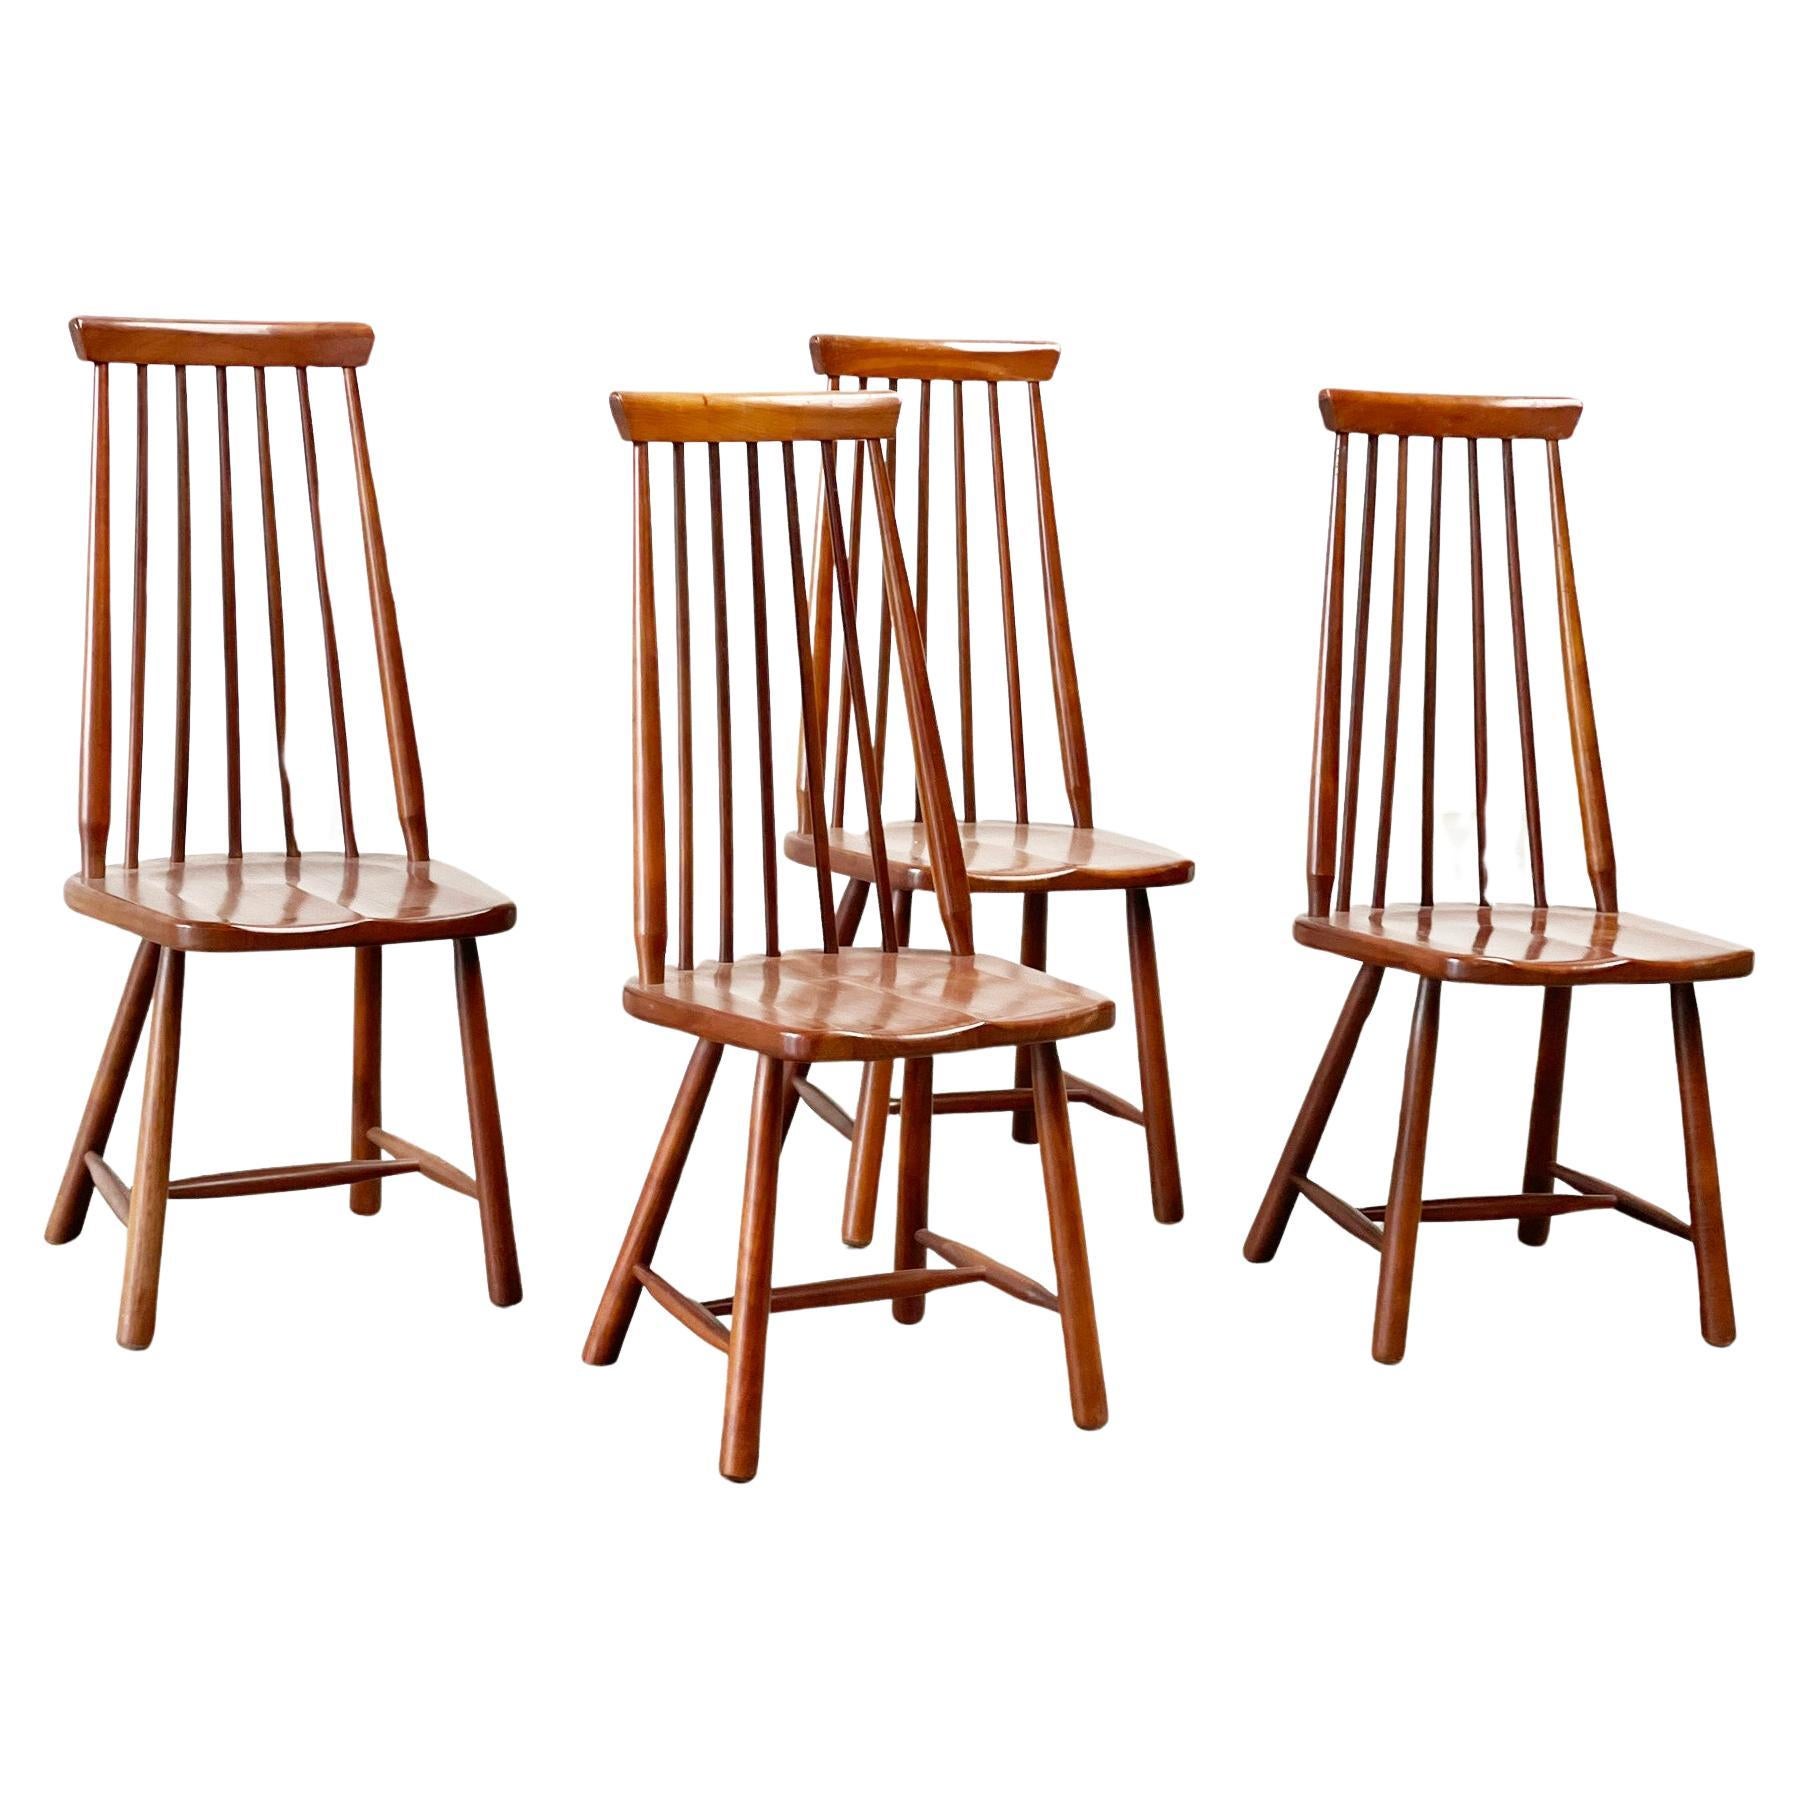 George Nakashima style dining chairs